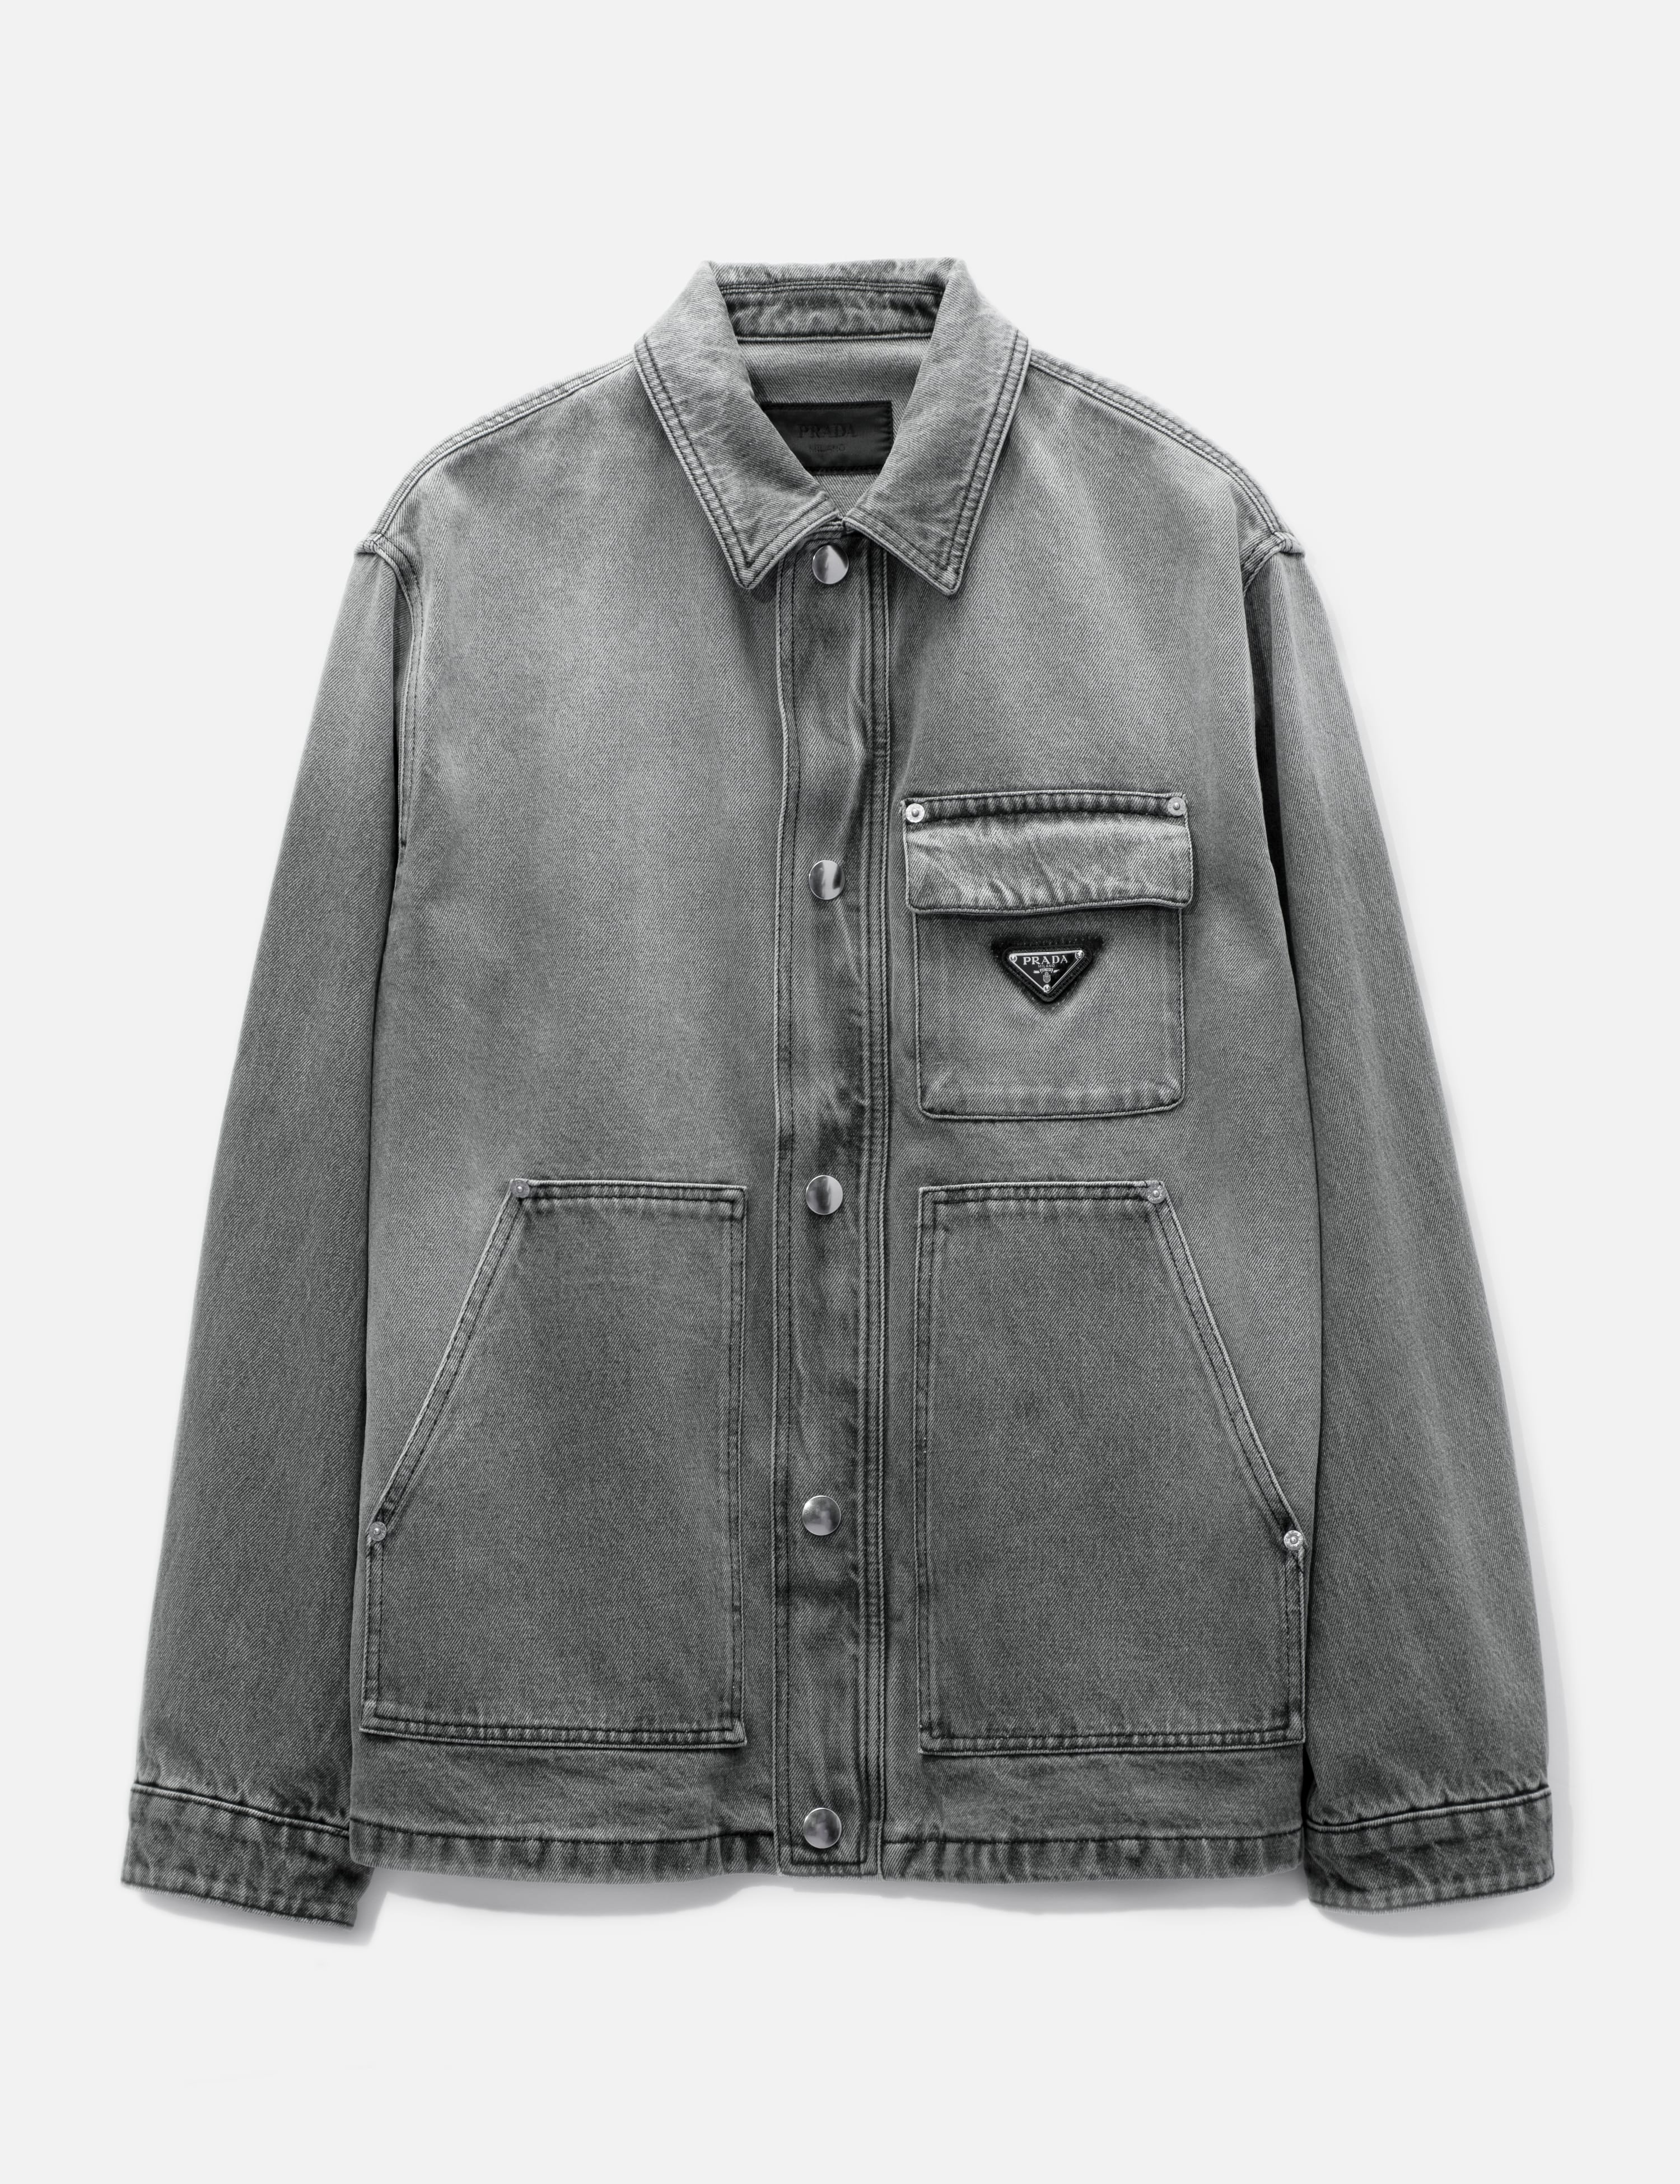 Prada - Denim Zip-Up Jacket | HBX - Globally Curated Fashion and